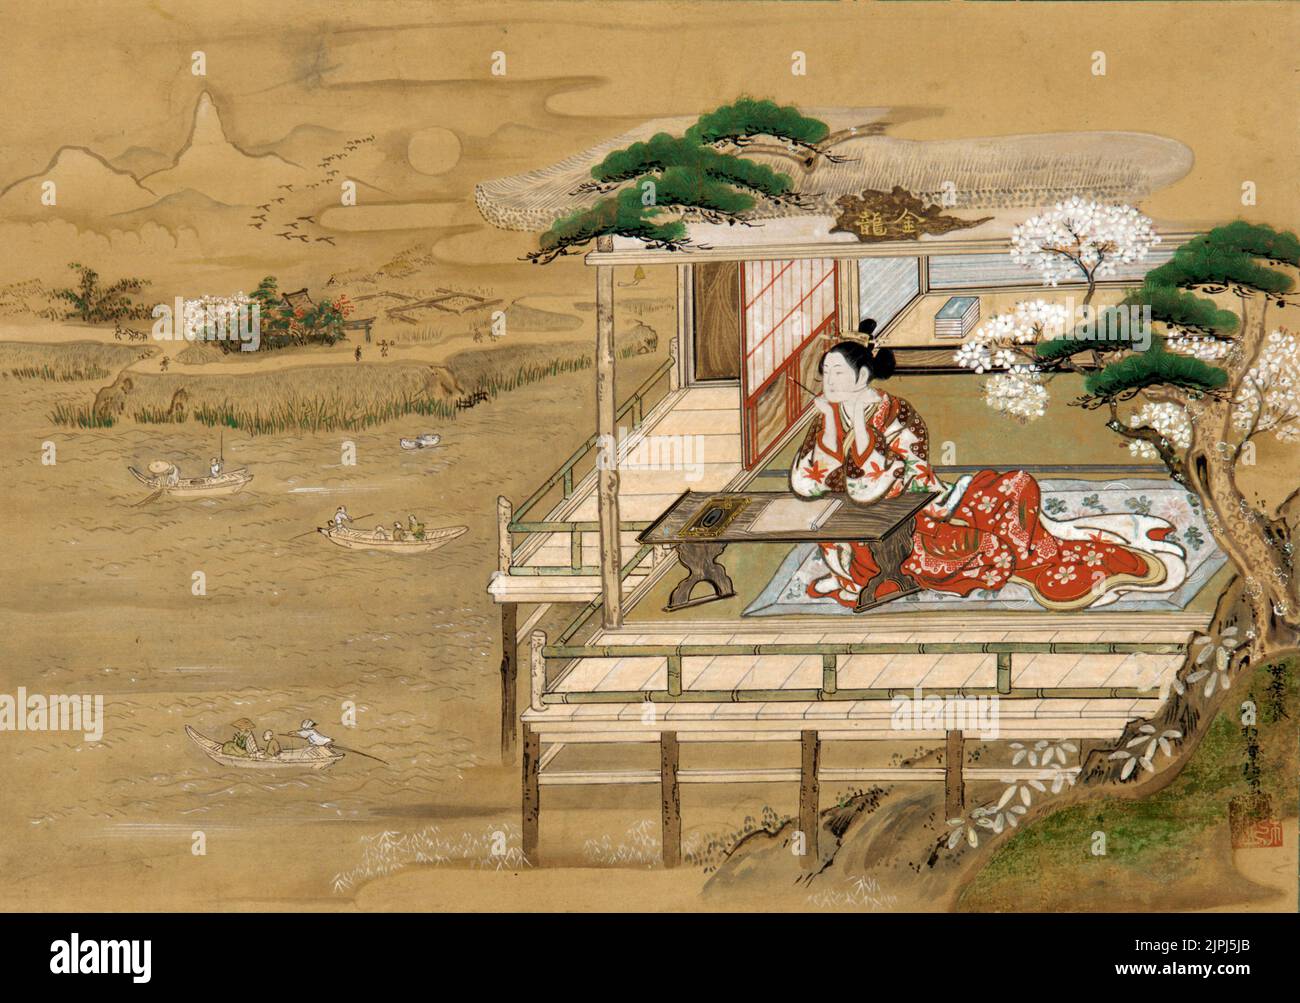 Murasaki Shikibu composing The Tale of Genji. by Yashima Gakute Murasaki Shikibu, Japanese novelist, poet and lady-in-waiting at the Imperial court in the Heian period. Stock Photo